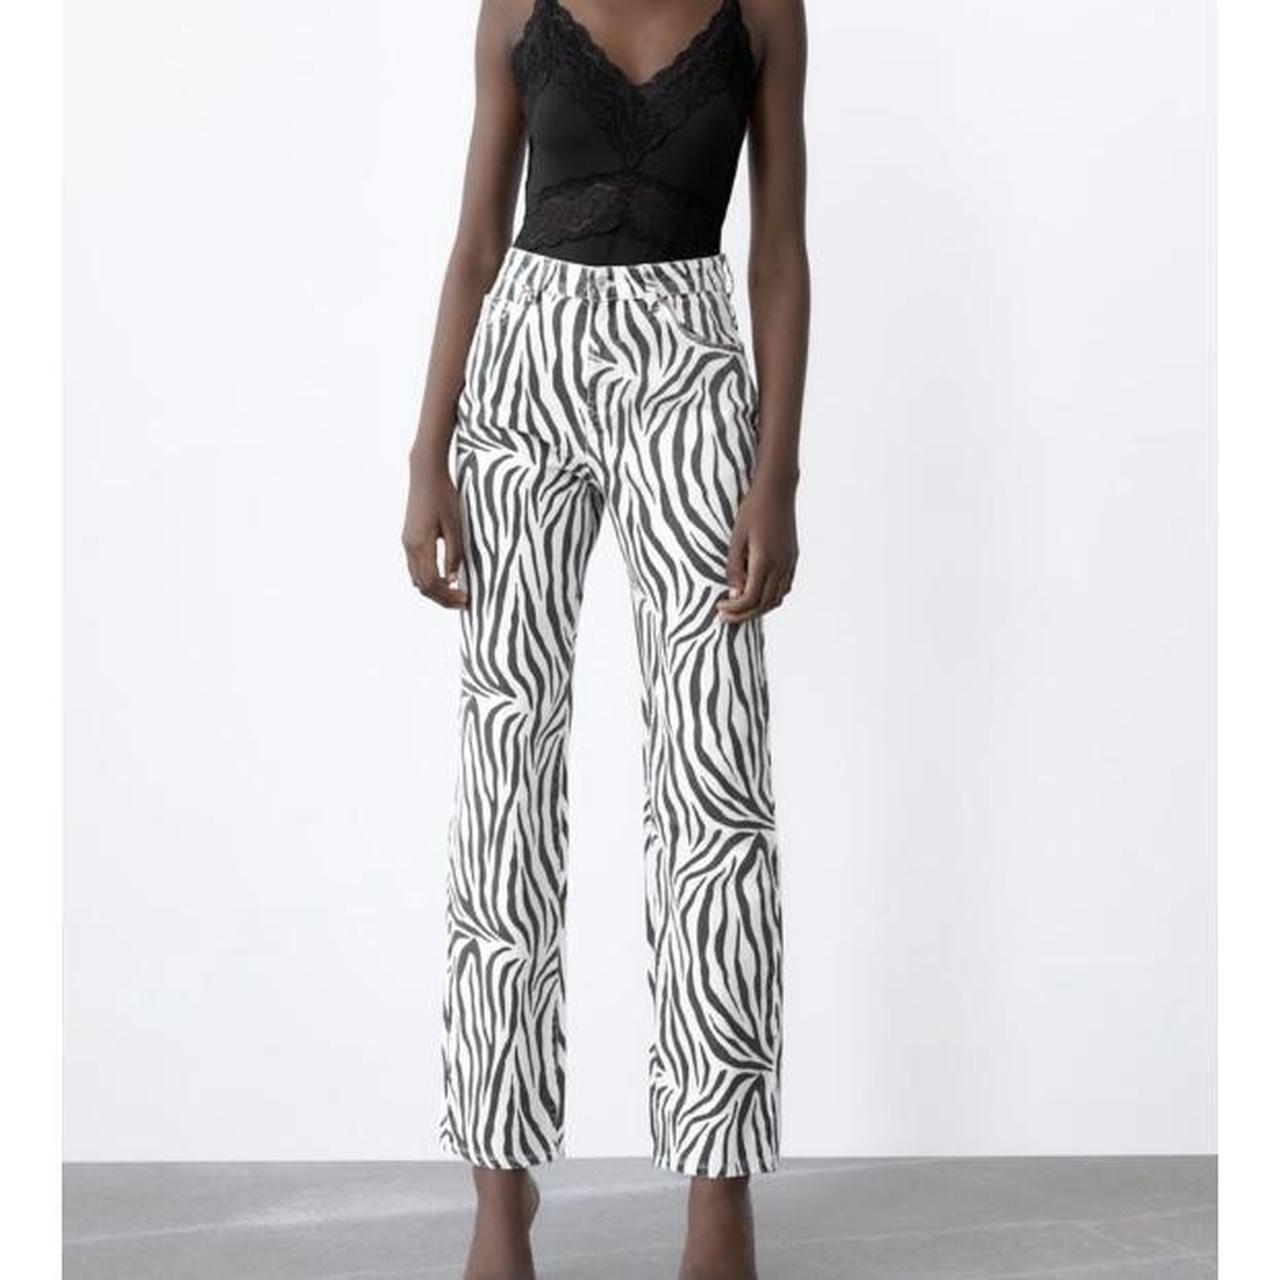 Blogger Favorite: Zara floral trousers